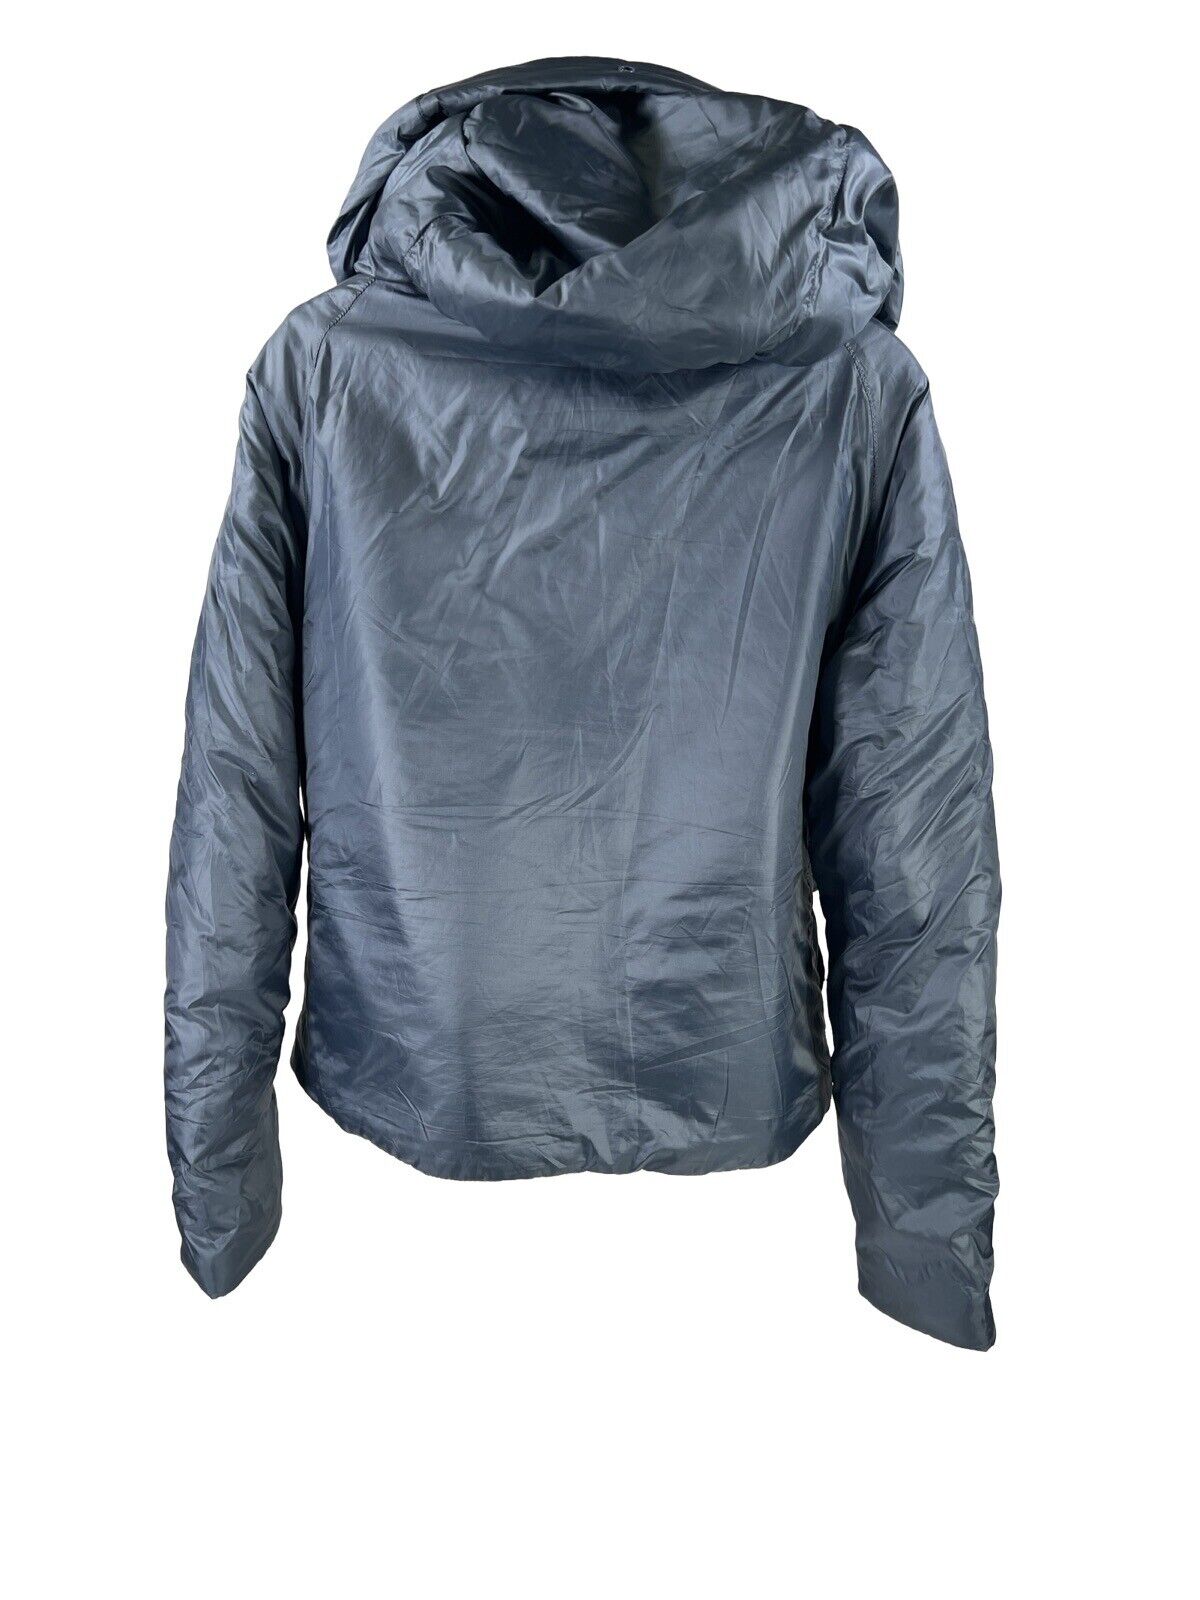 Merrell Abrigo de invierno acolchado Opti Warm con capucha azul para mujer - M